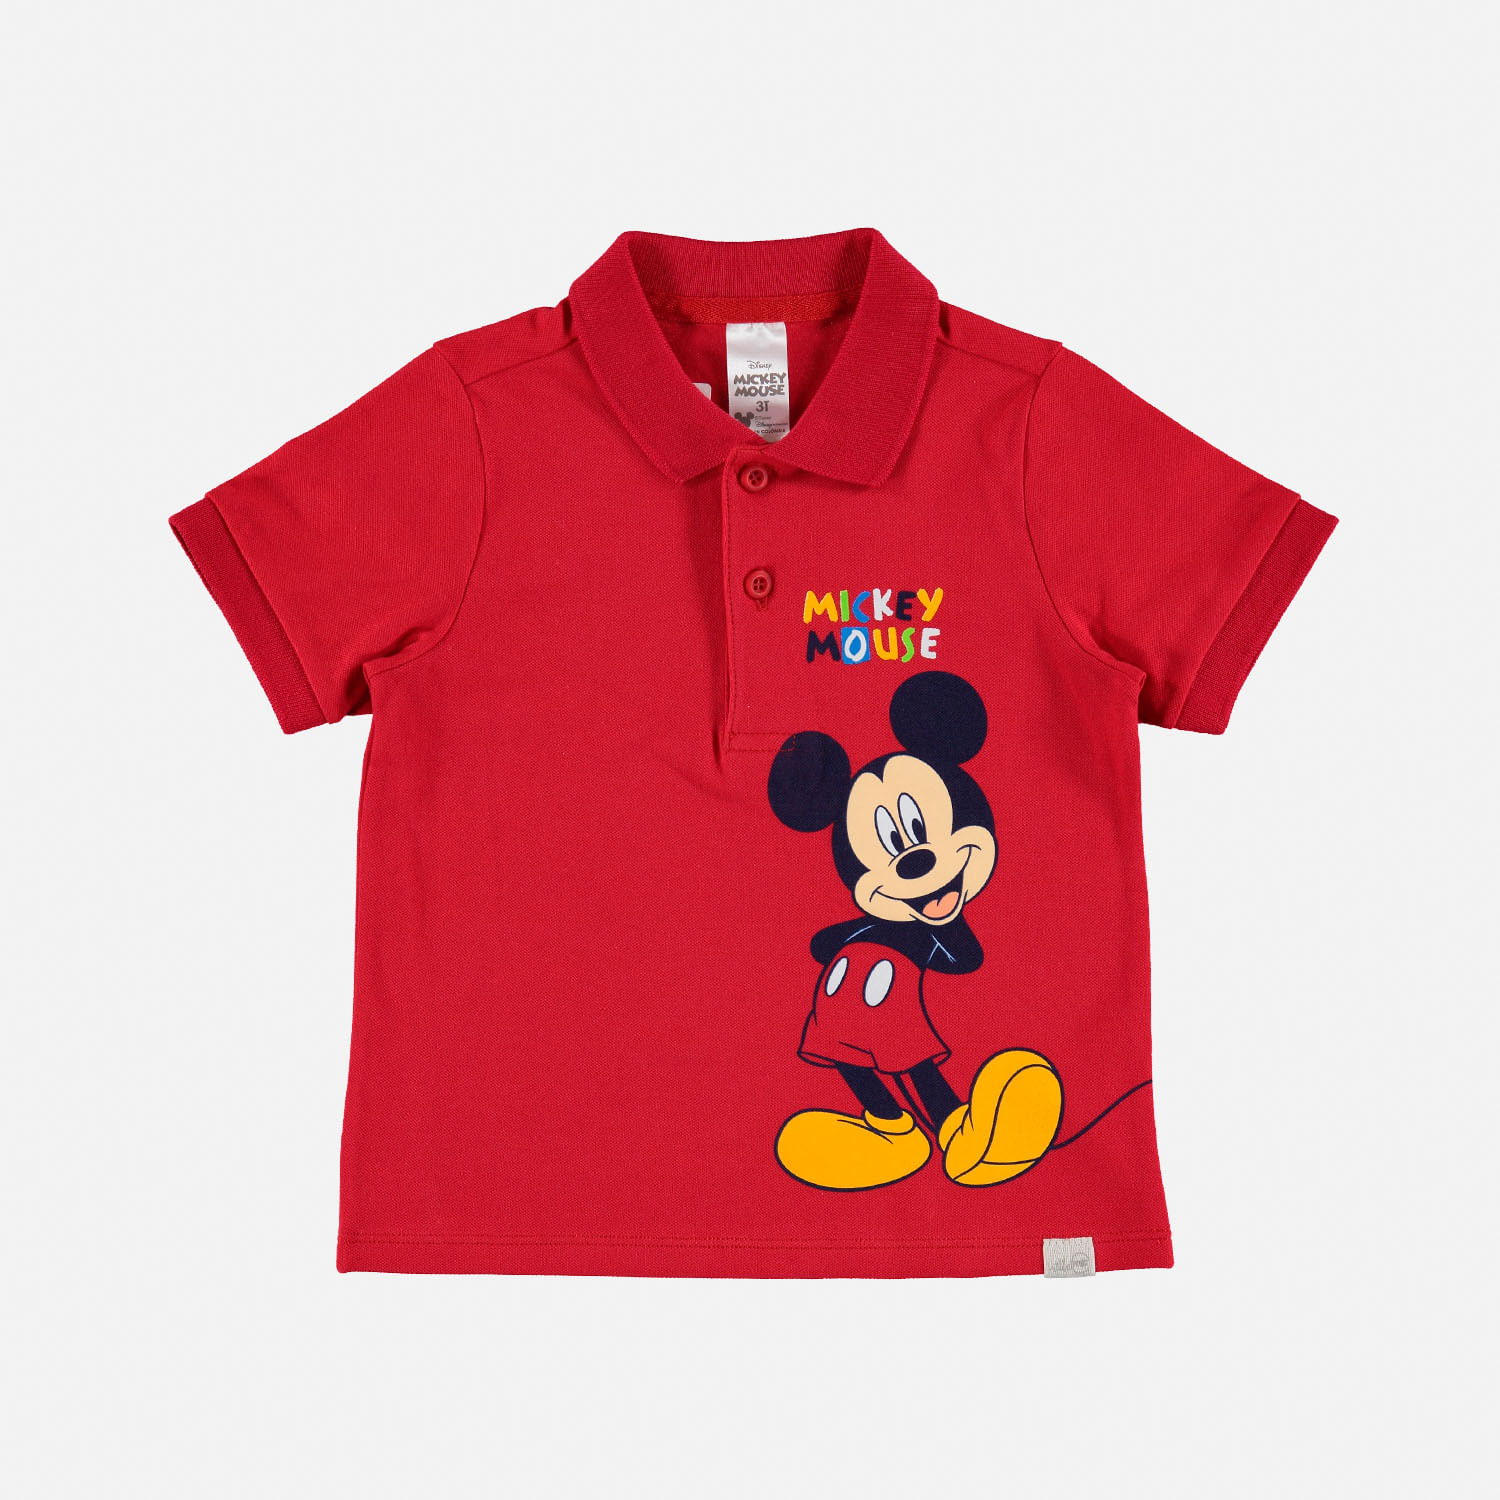 Ventilar Fabricante demanda Camiseta de niño, manga corta roja de Mickey Mouse ©Disney